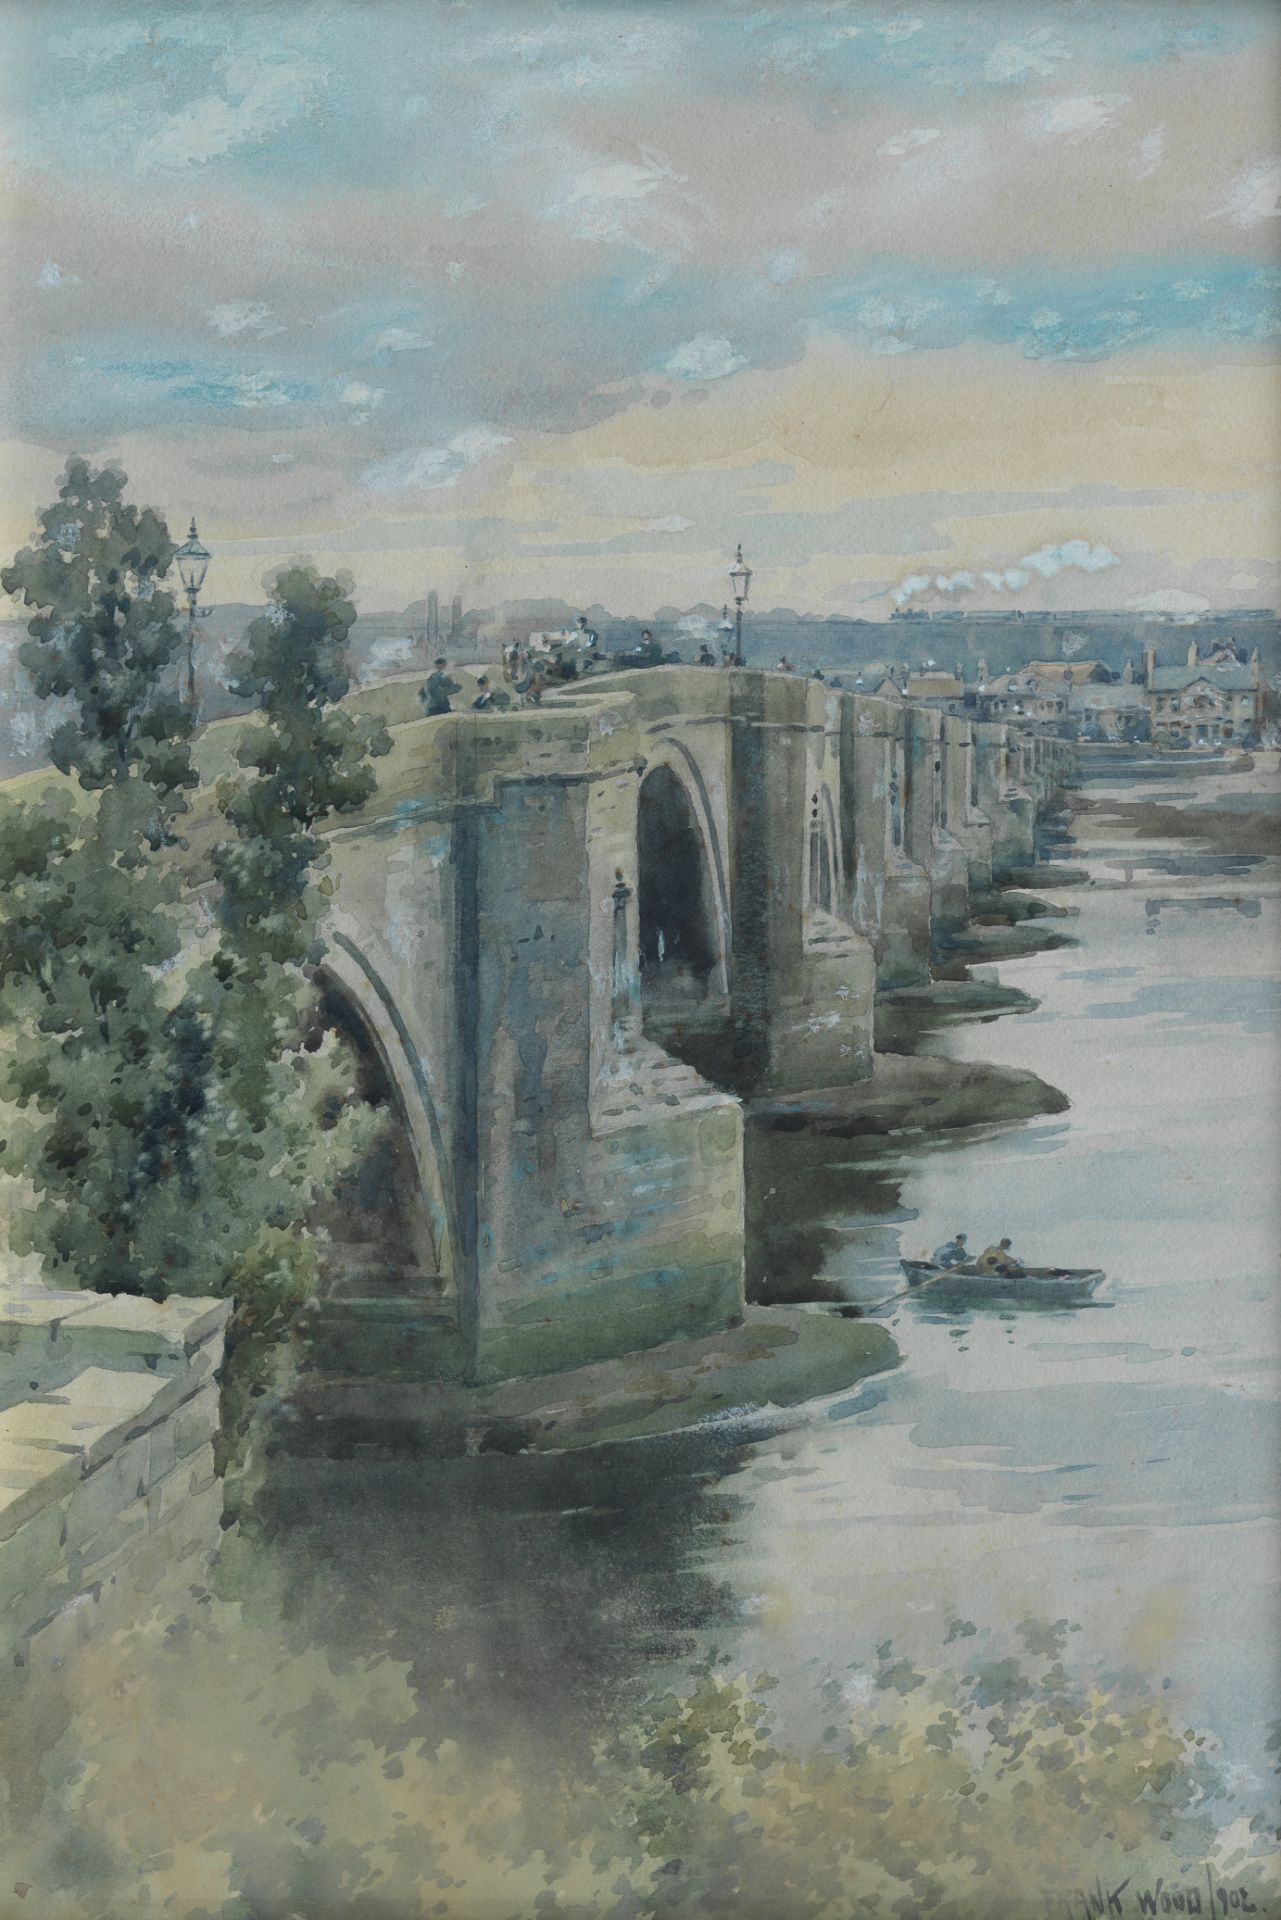 Frank Watson Wood (British, 1862-1953) The Old Bridge, Berwick-upon-Tweed